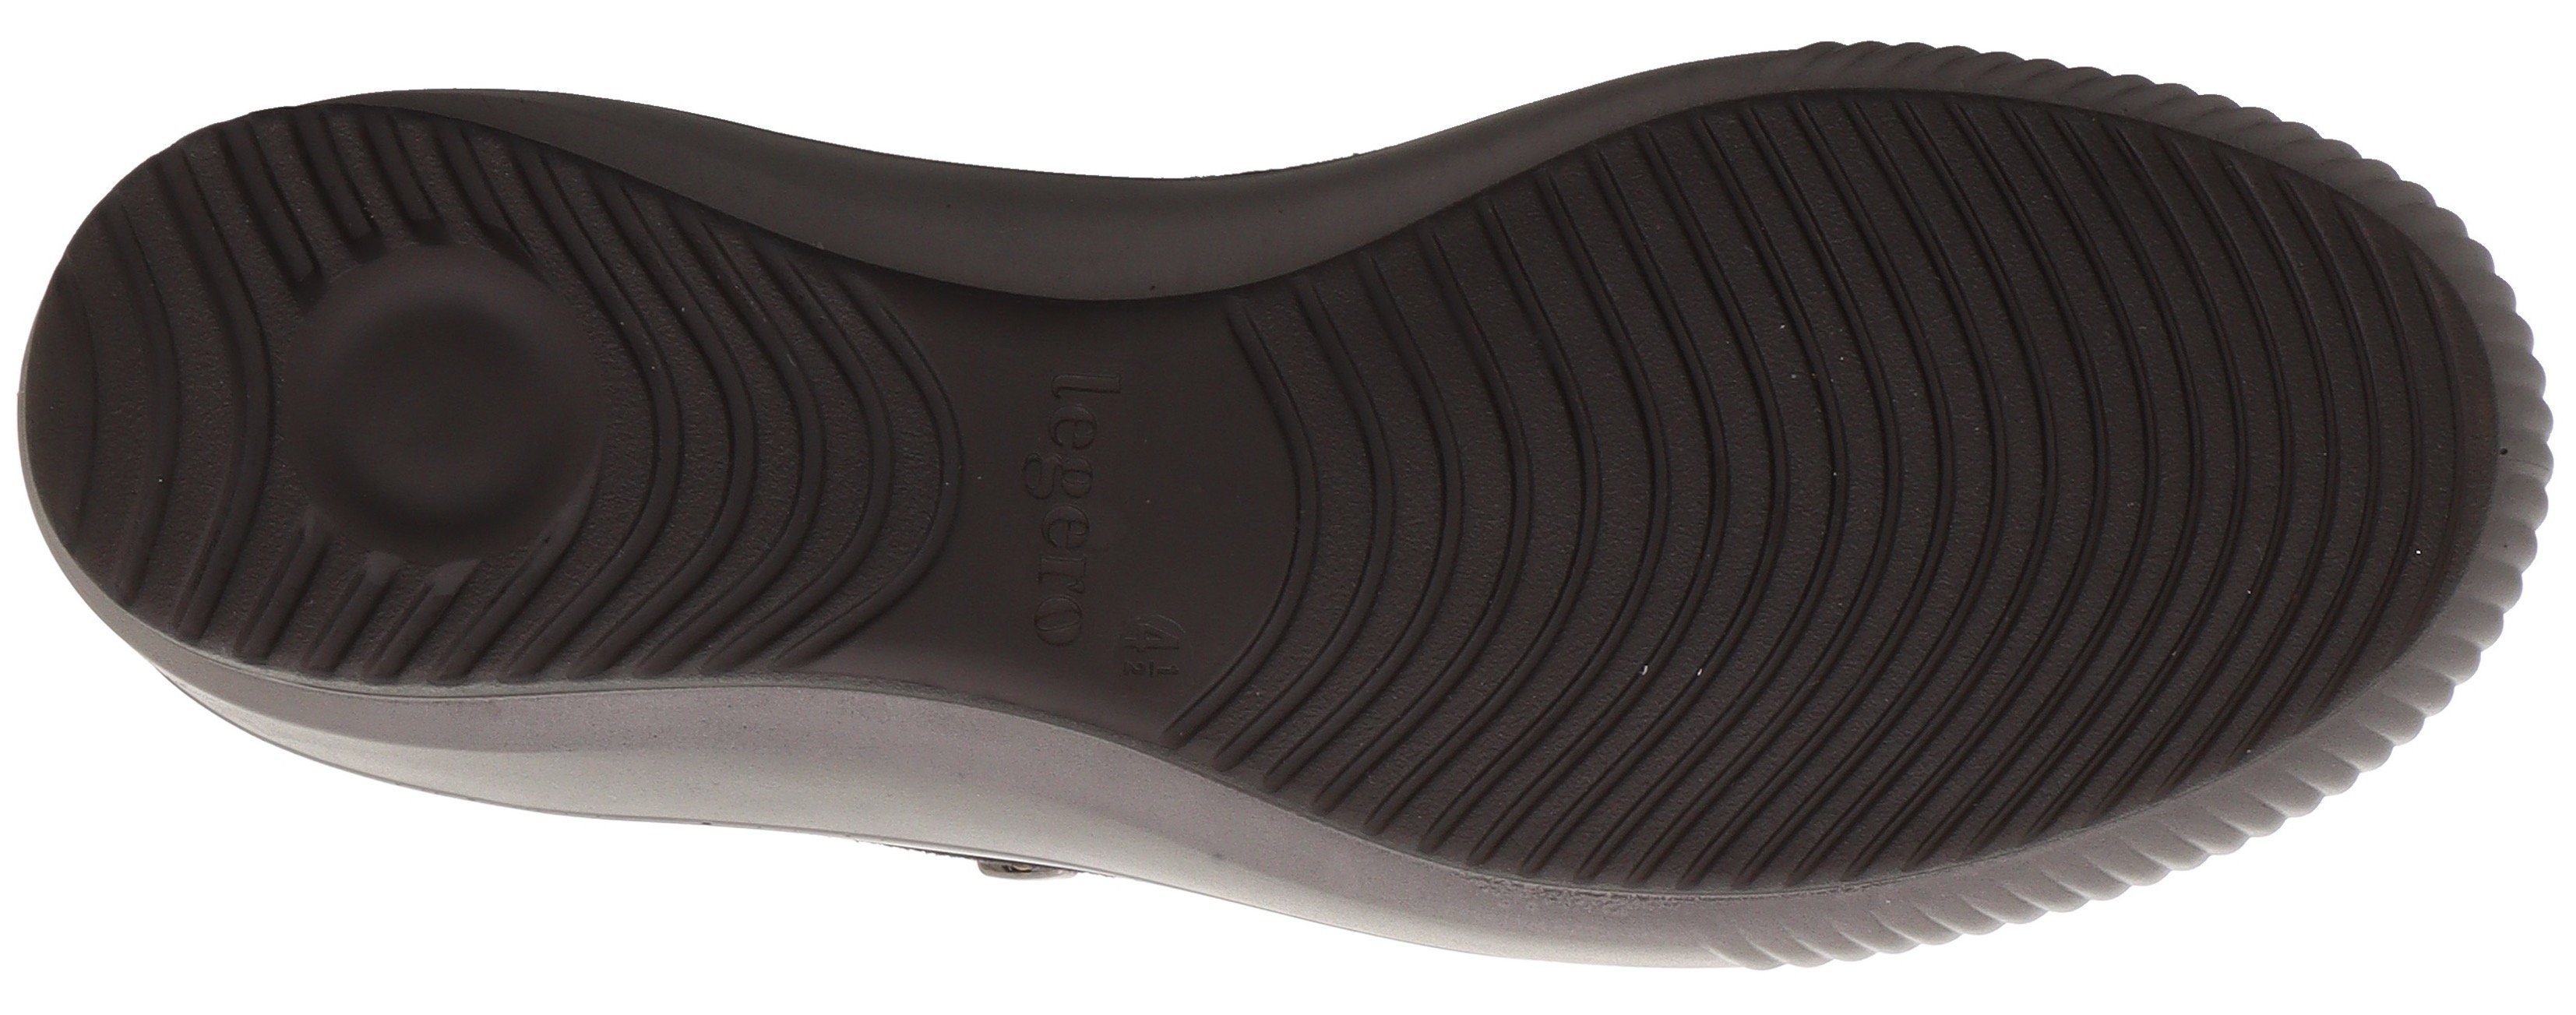 Legero TANARO 5.0 Sneaker mit dunkelblau herausnehmbarer Innensohle